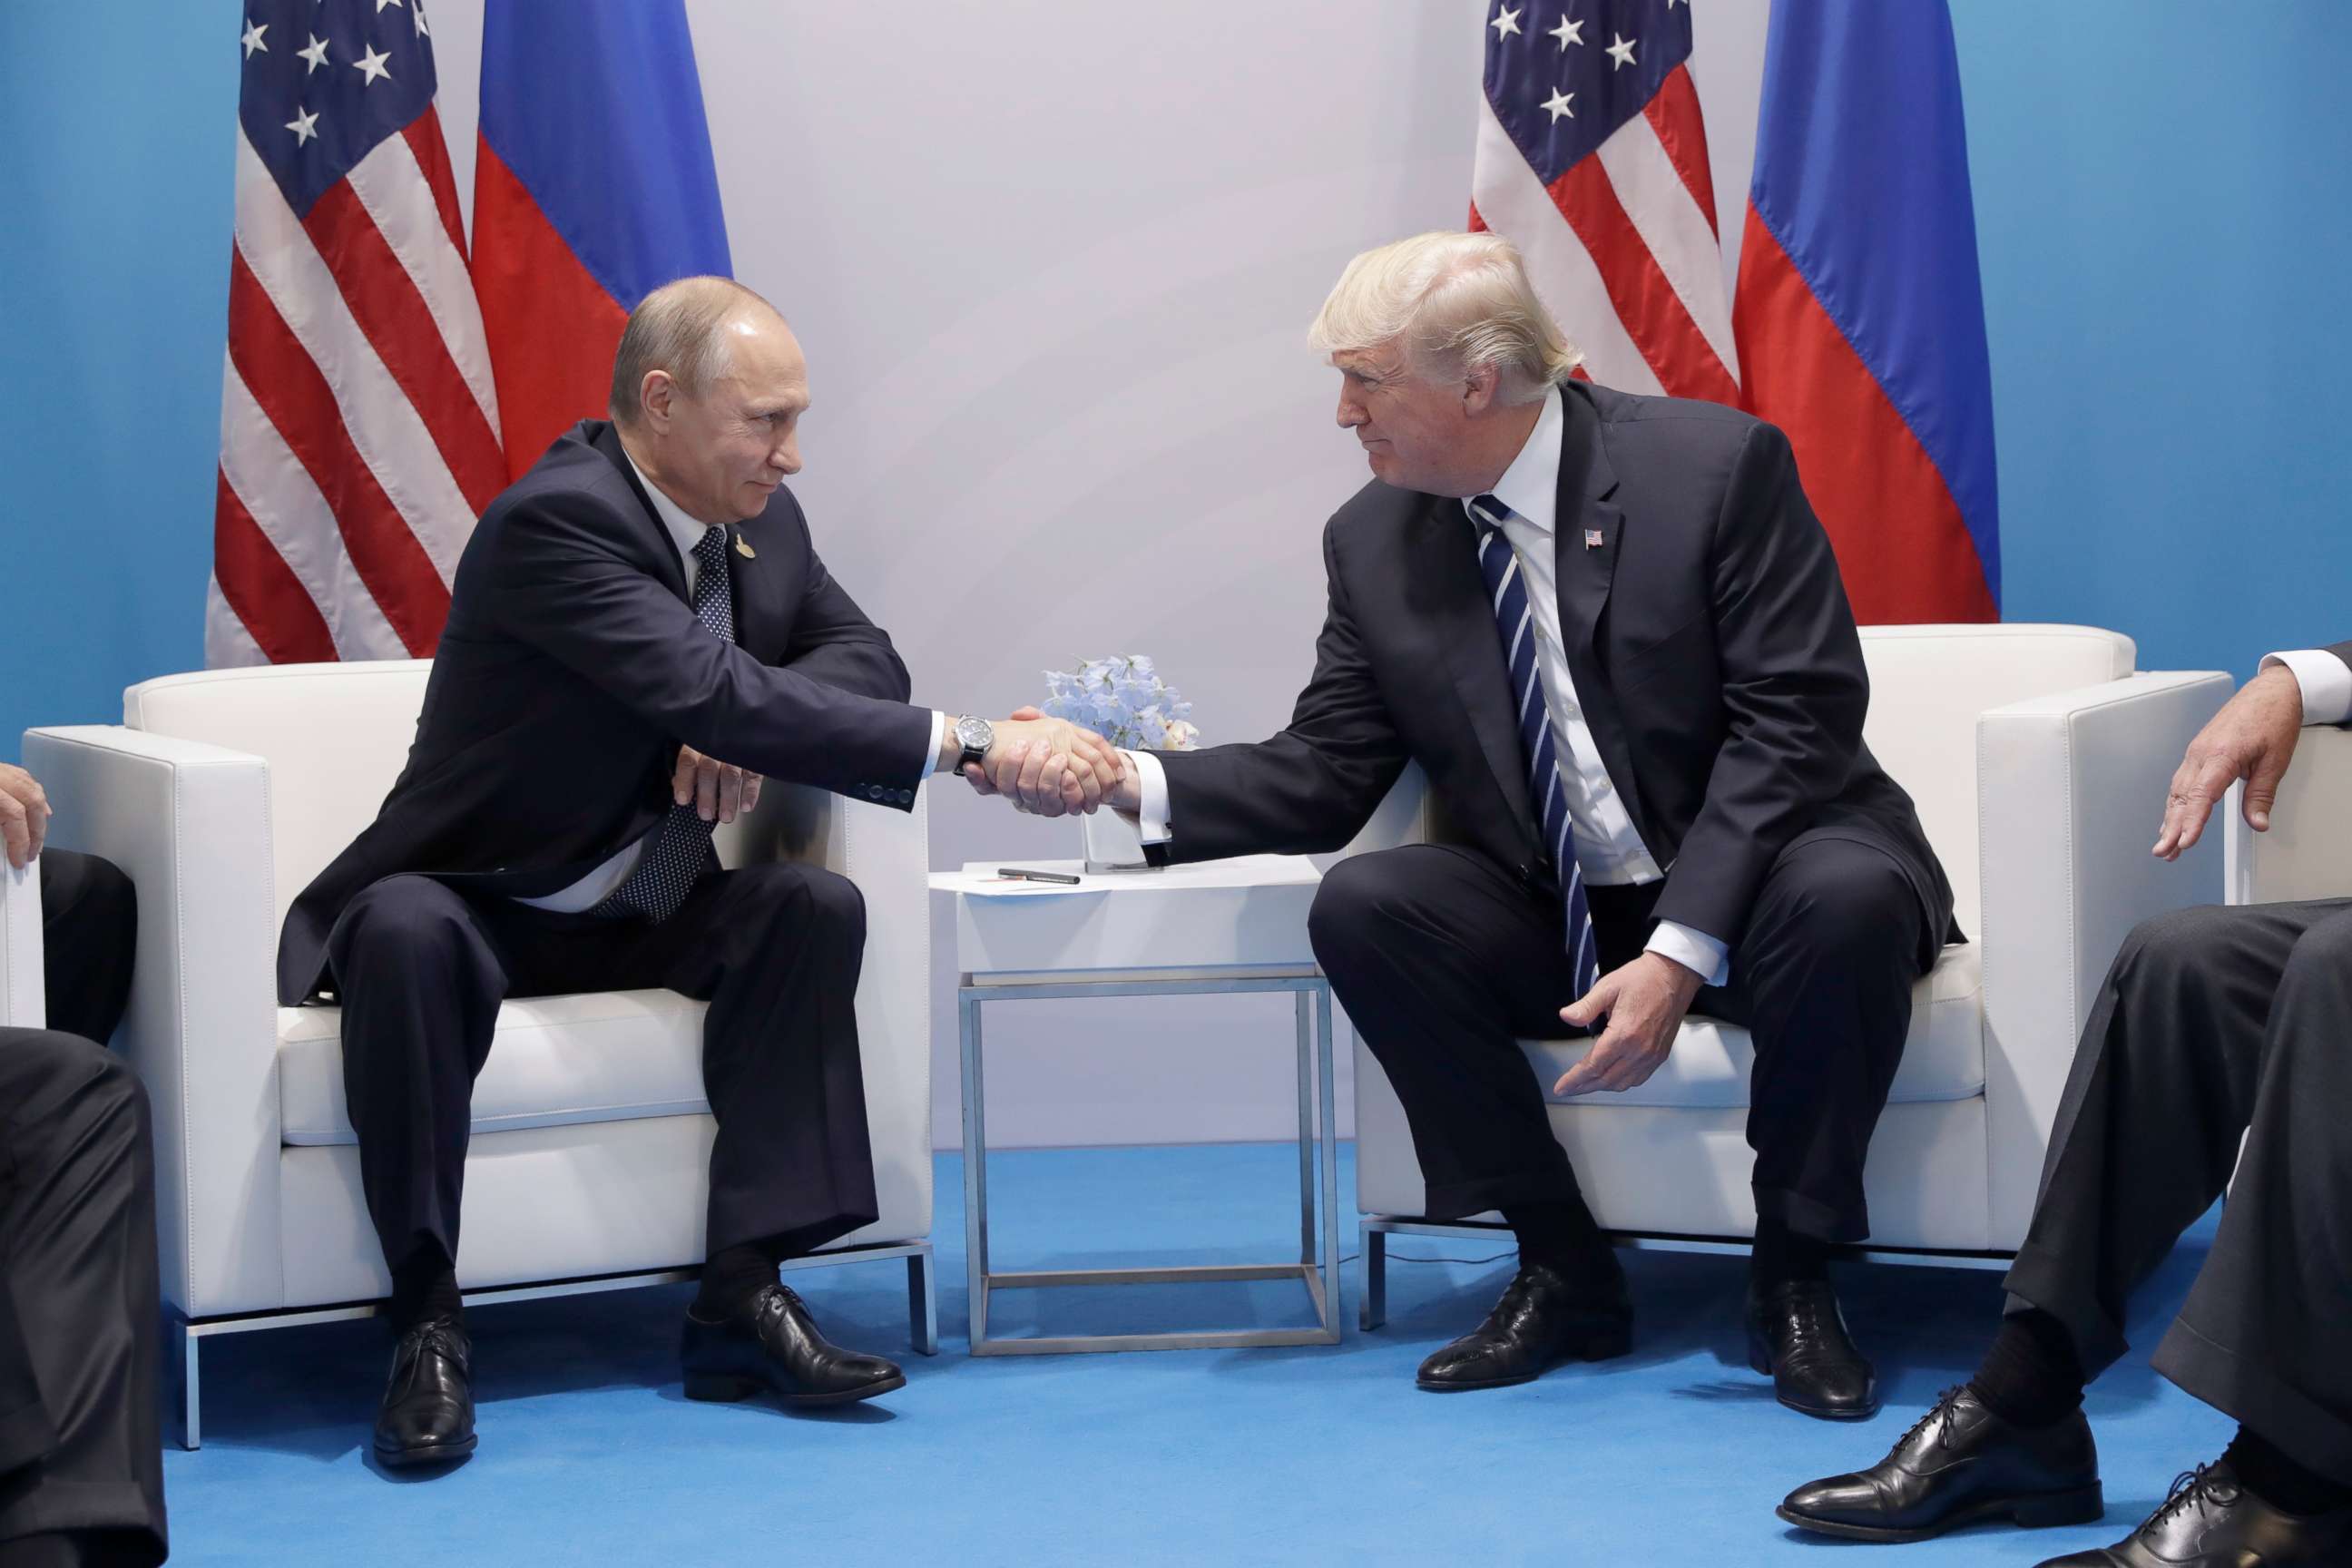 PHOTO: President Donald Trump shakes hands with Russian President Vladimir Putin at the G-20 Summit, July 7, 2017, in Hamburg, Germany.